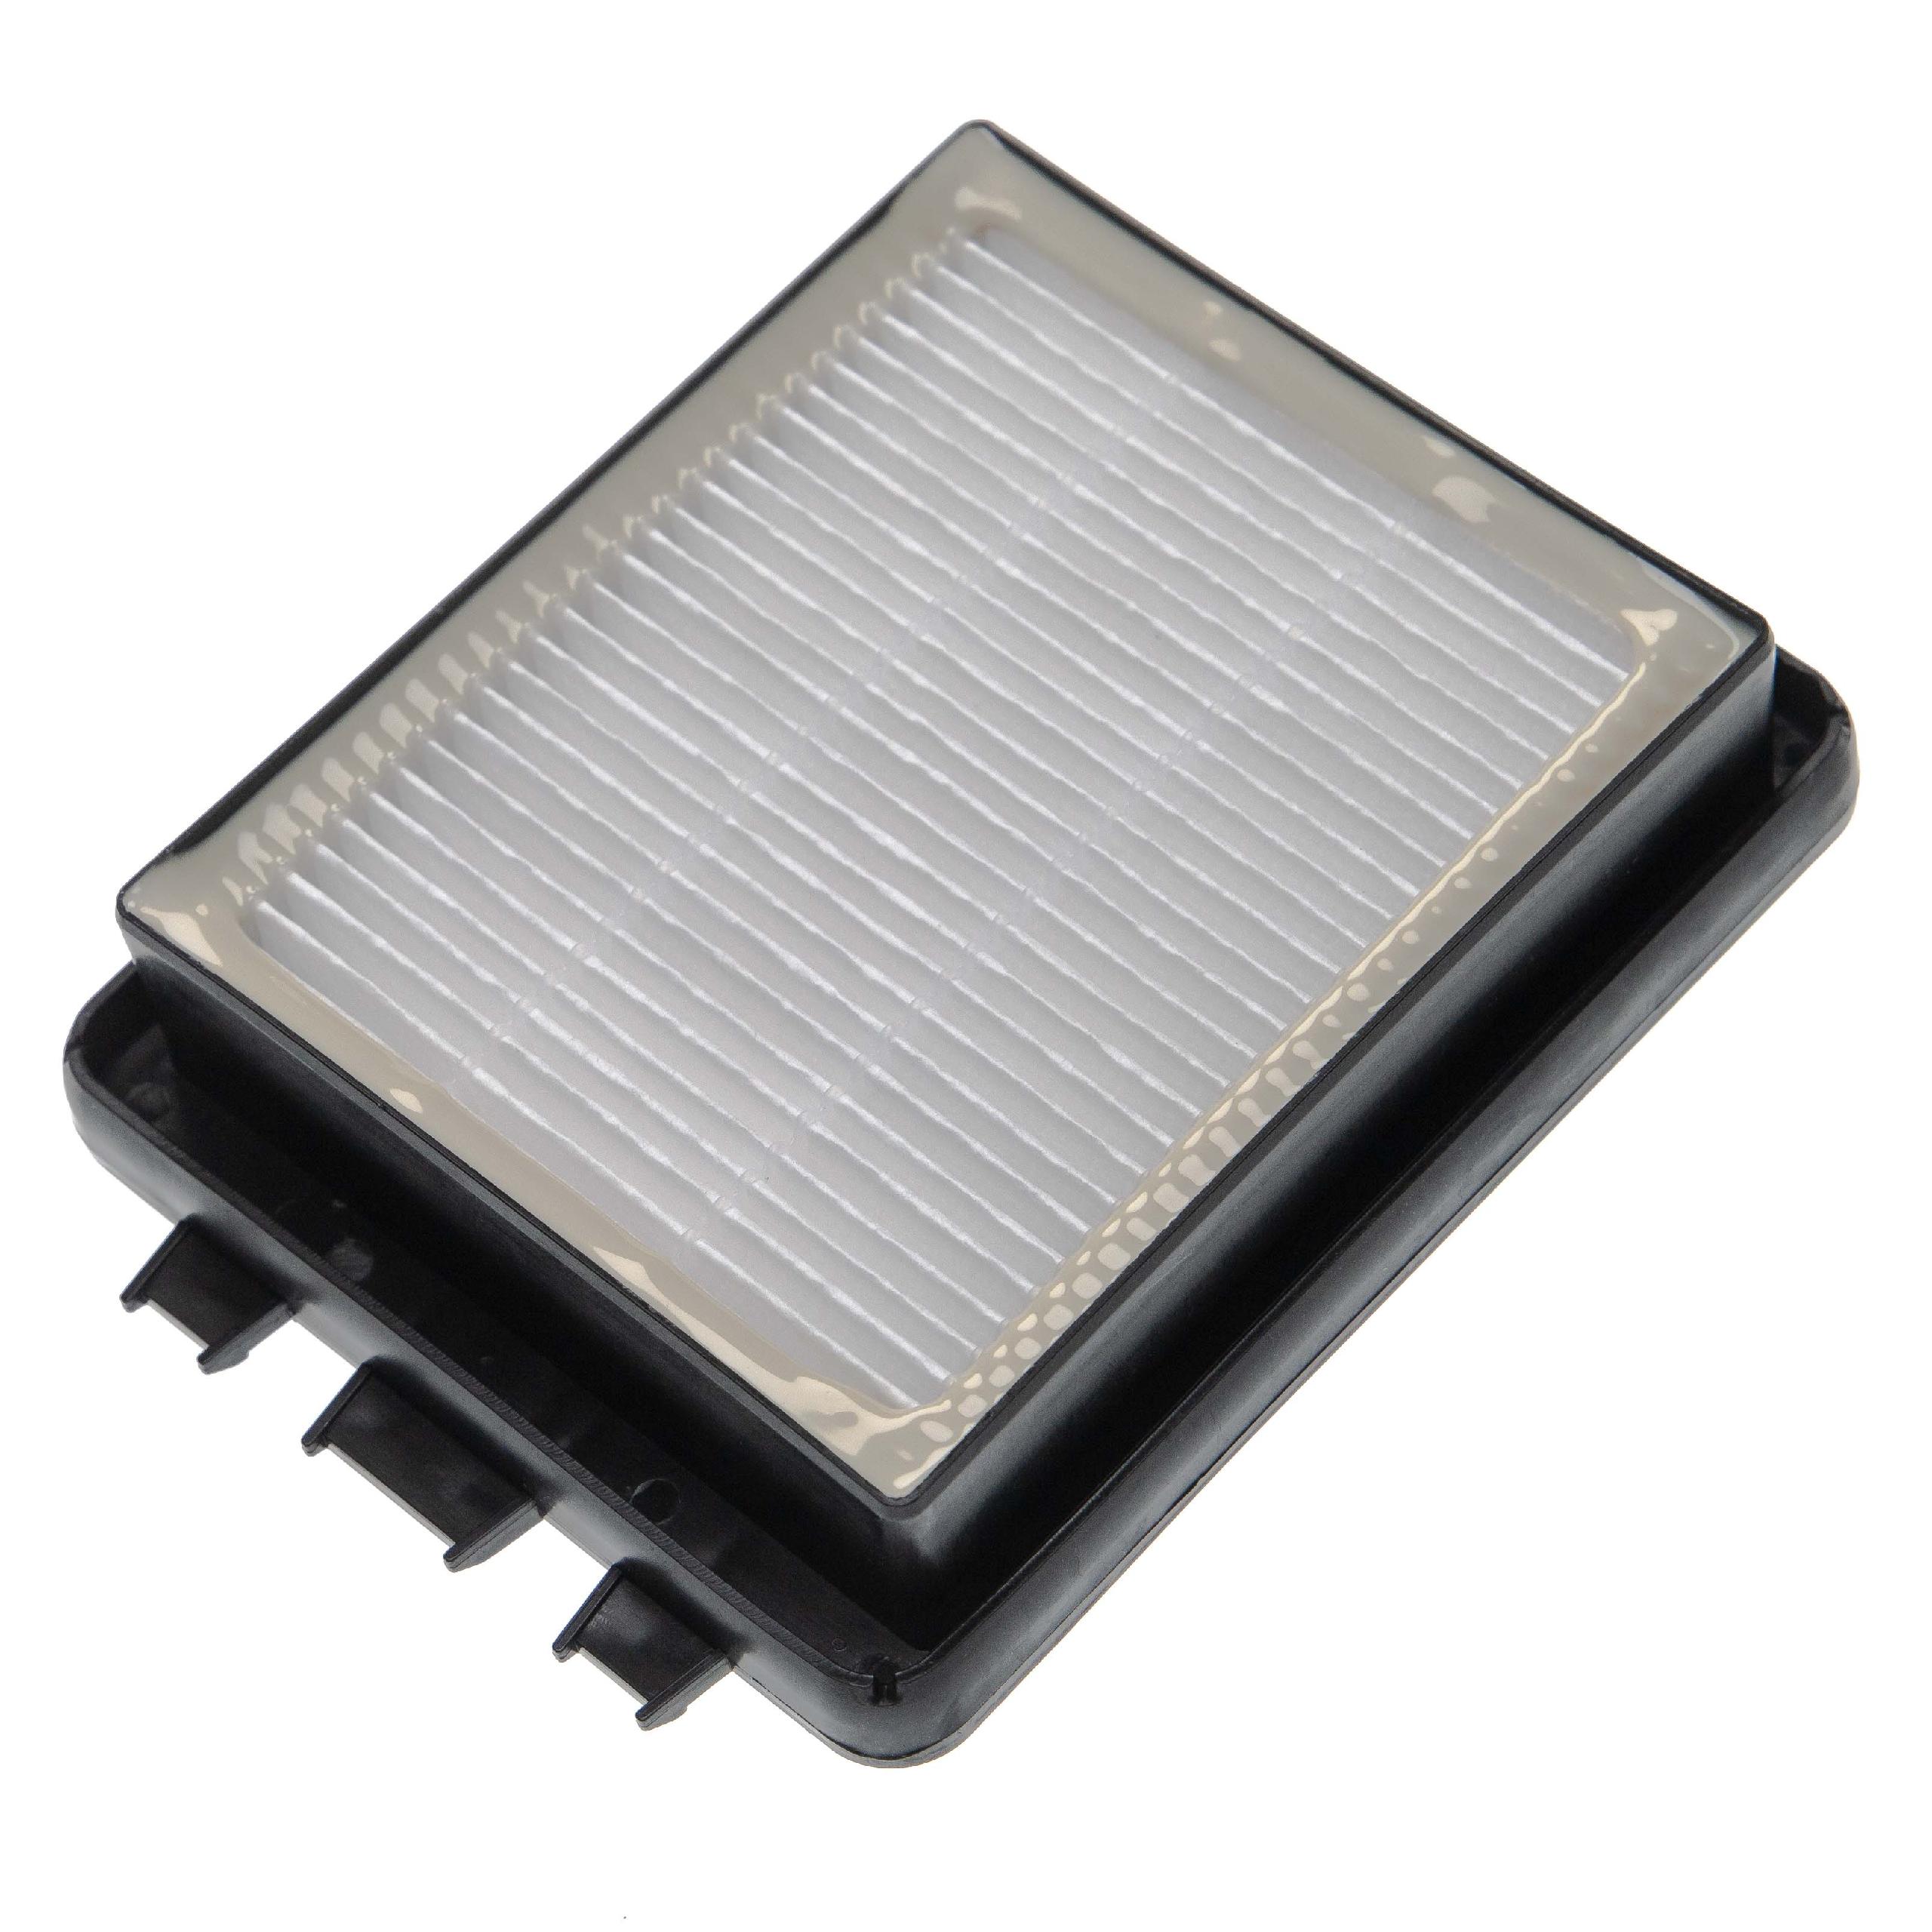 1x exhaust EPA filter replaces Kärcher 6.414-805.0, 64148050 for KärcherVacuum Cleaner